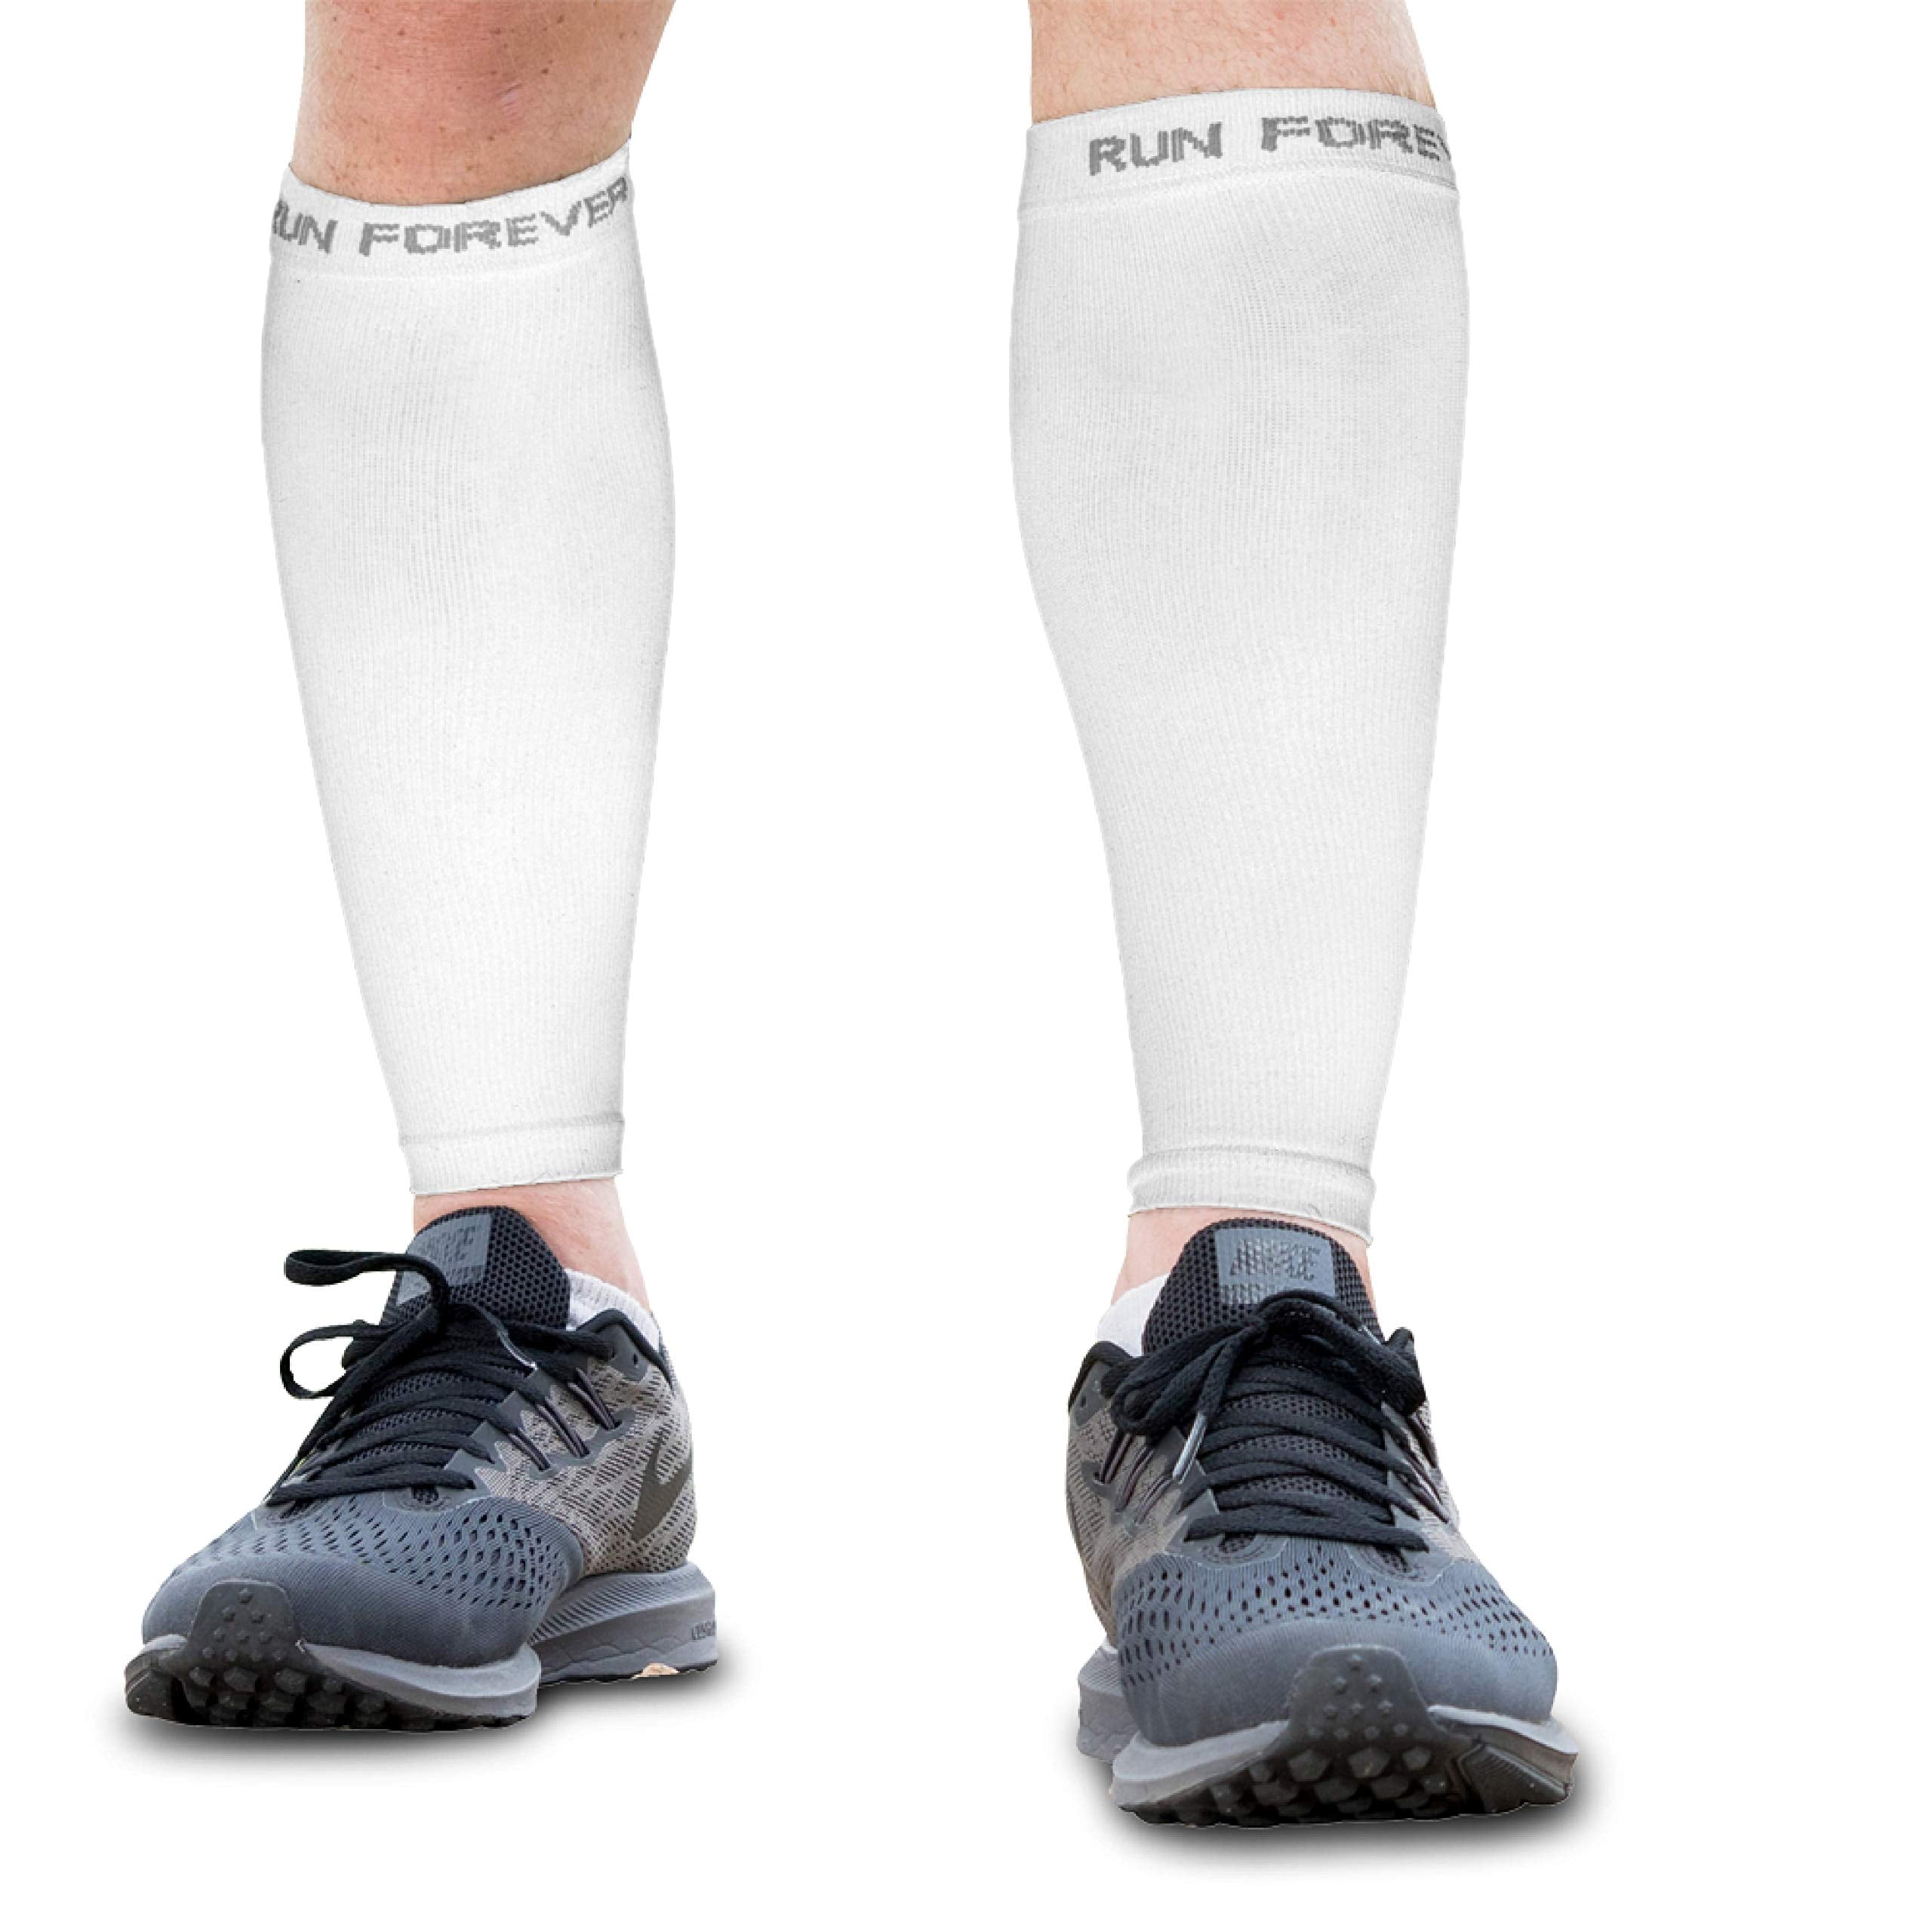 Run Forever Sports Calf Compression Sleeves (Pair) 20-30 MMHG